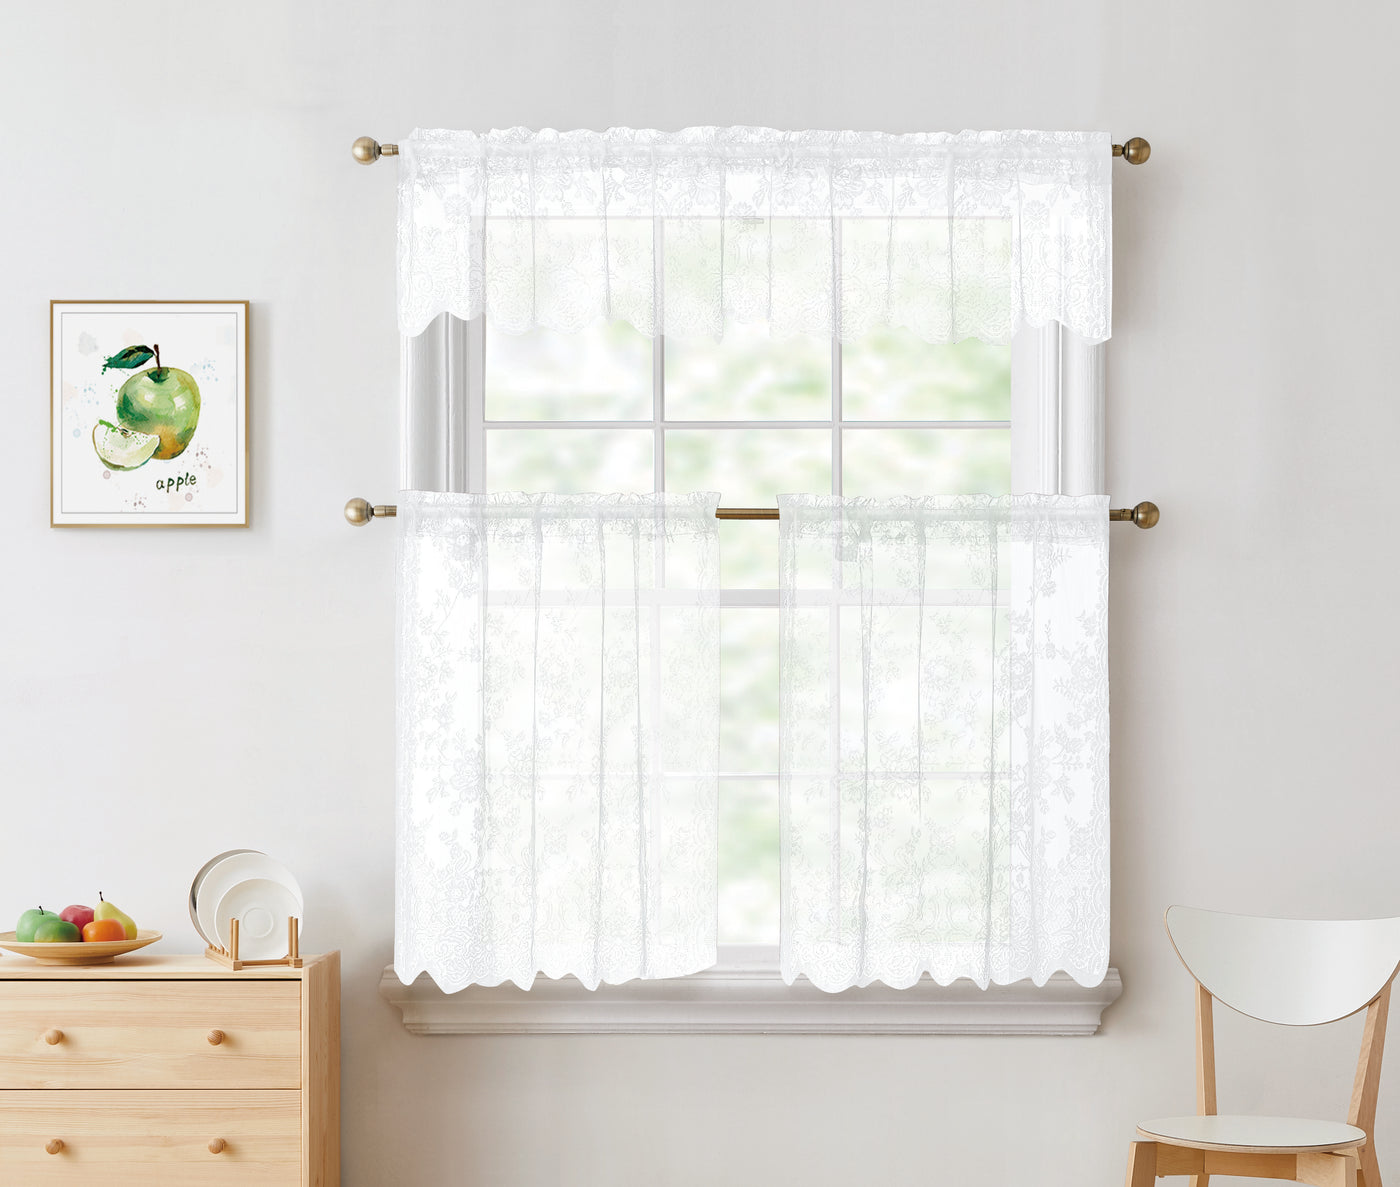 3pc Alison Sheer Flower Floral Lace Rod Pocket Curtain Panel Window Treatment Set | Jenin Home Furnishing.